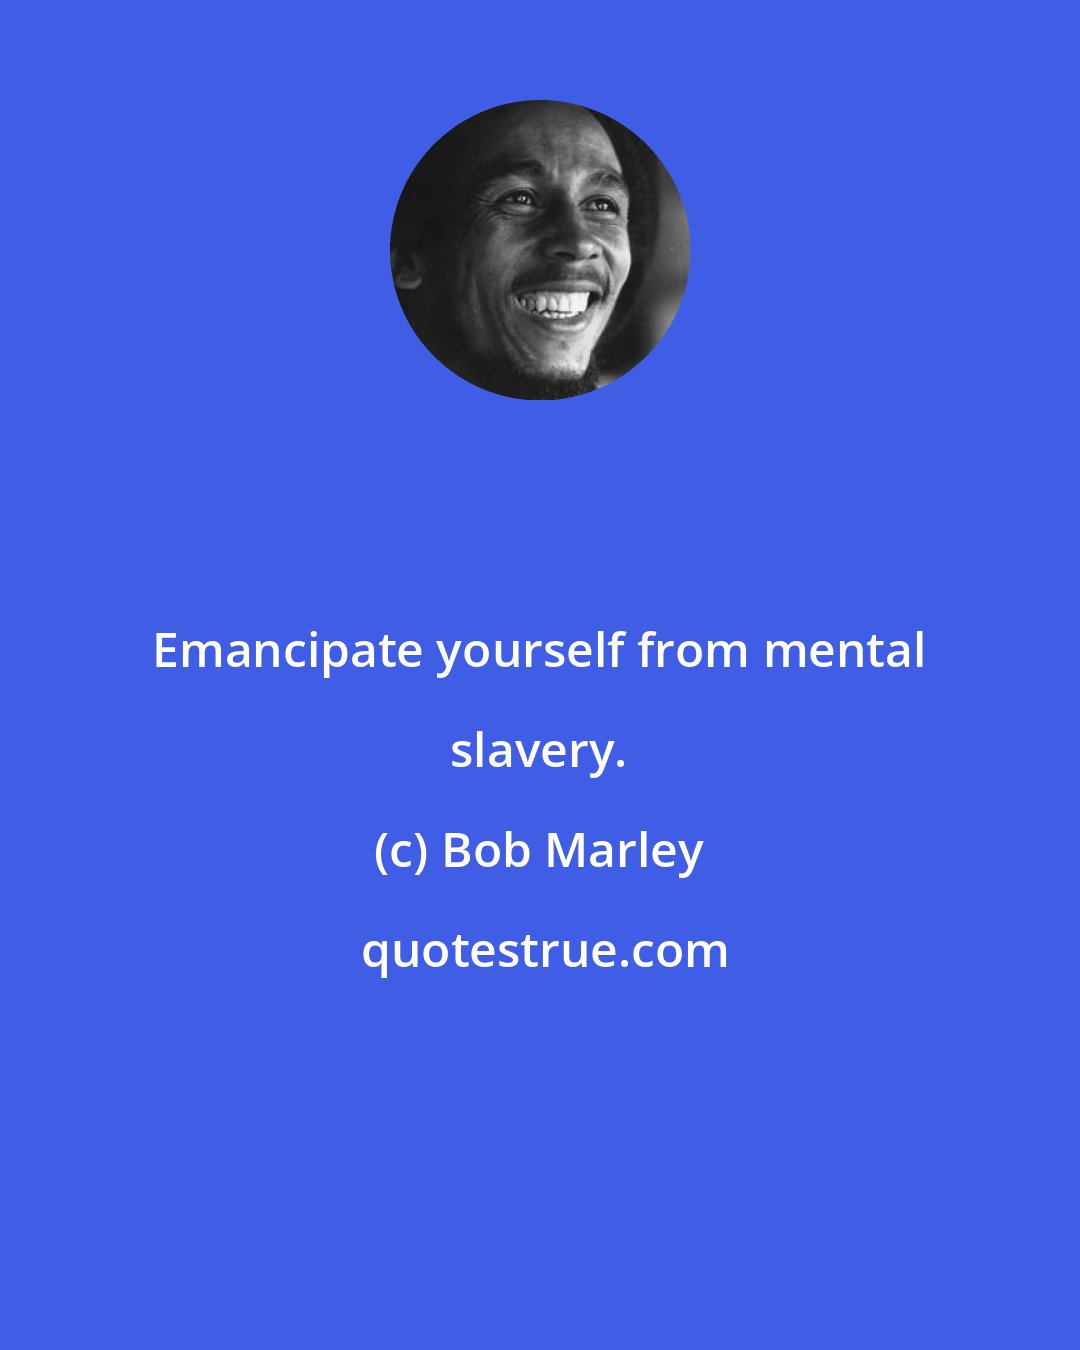 Bob Marley: Emancipate yourself from mental slavery.